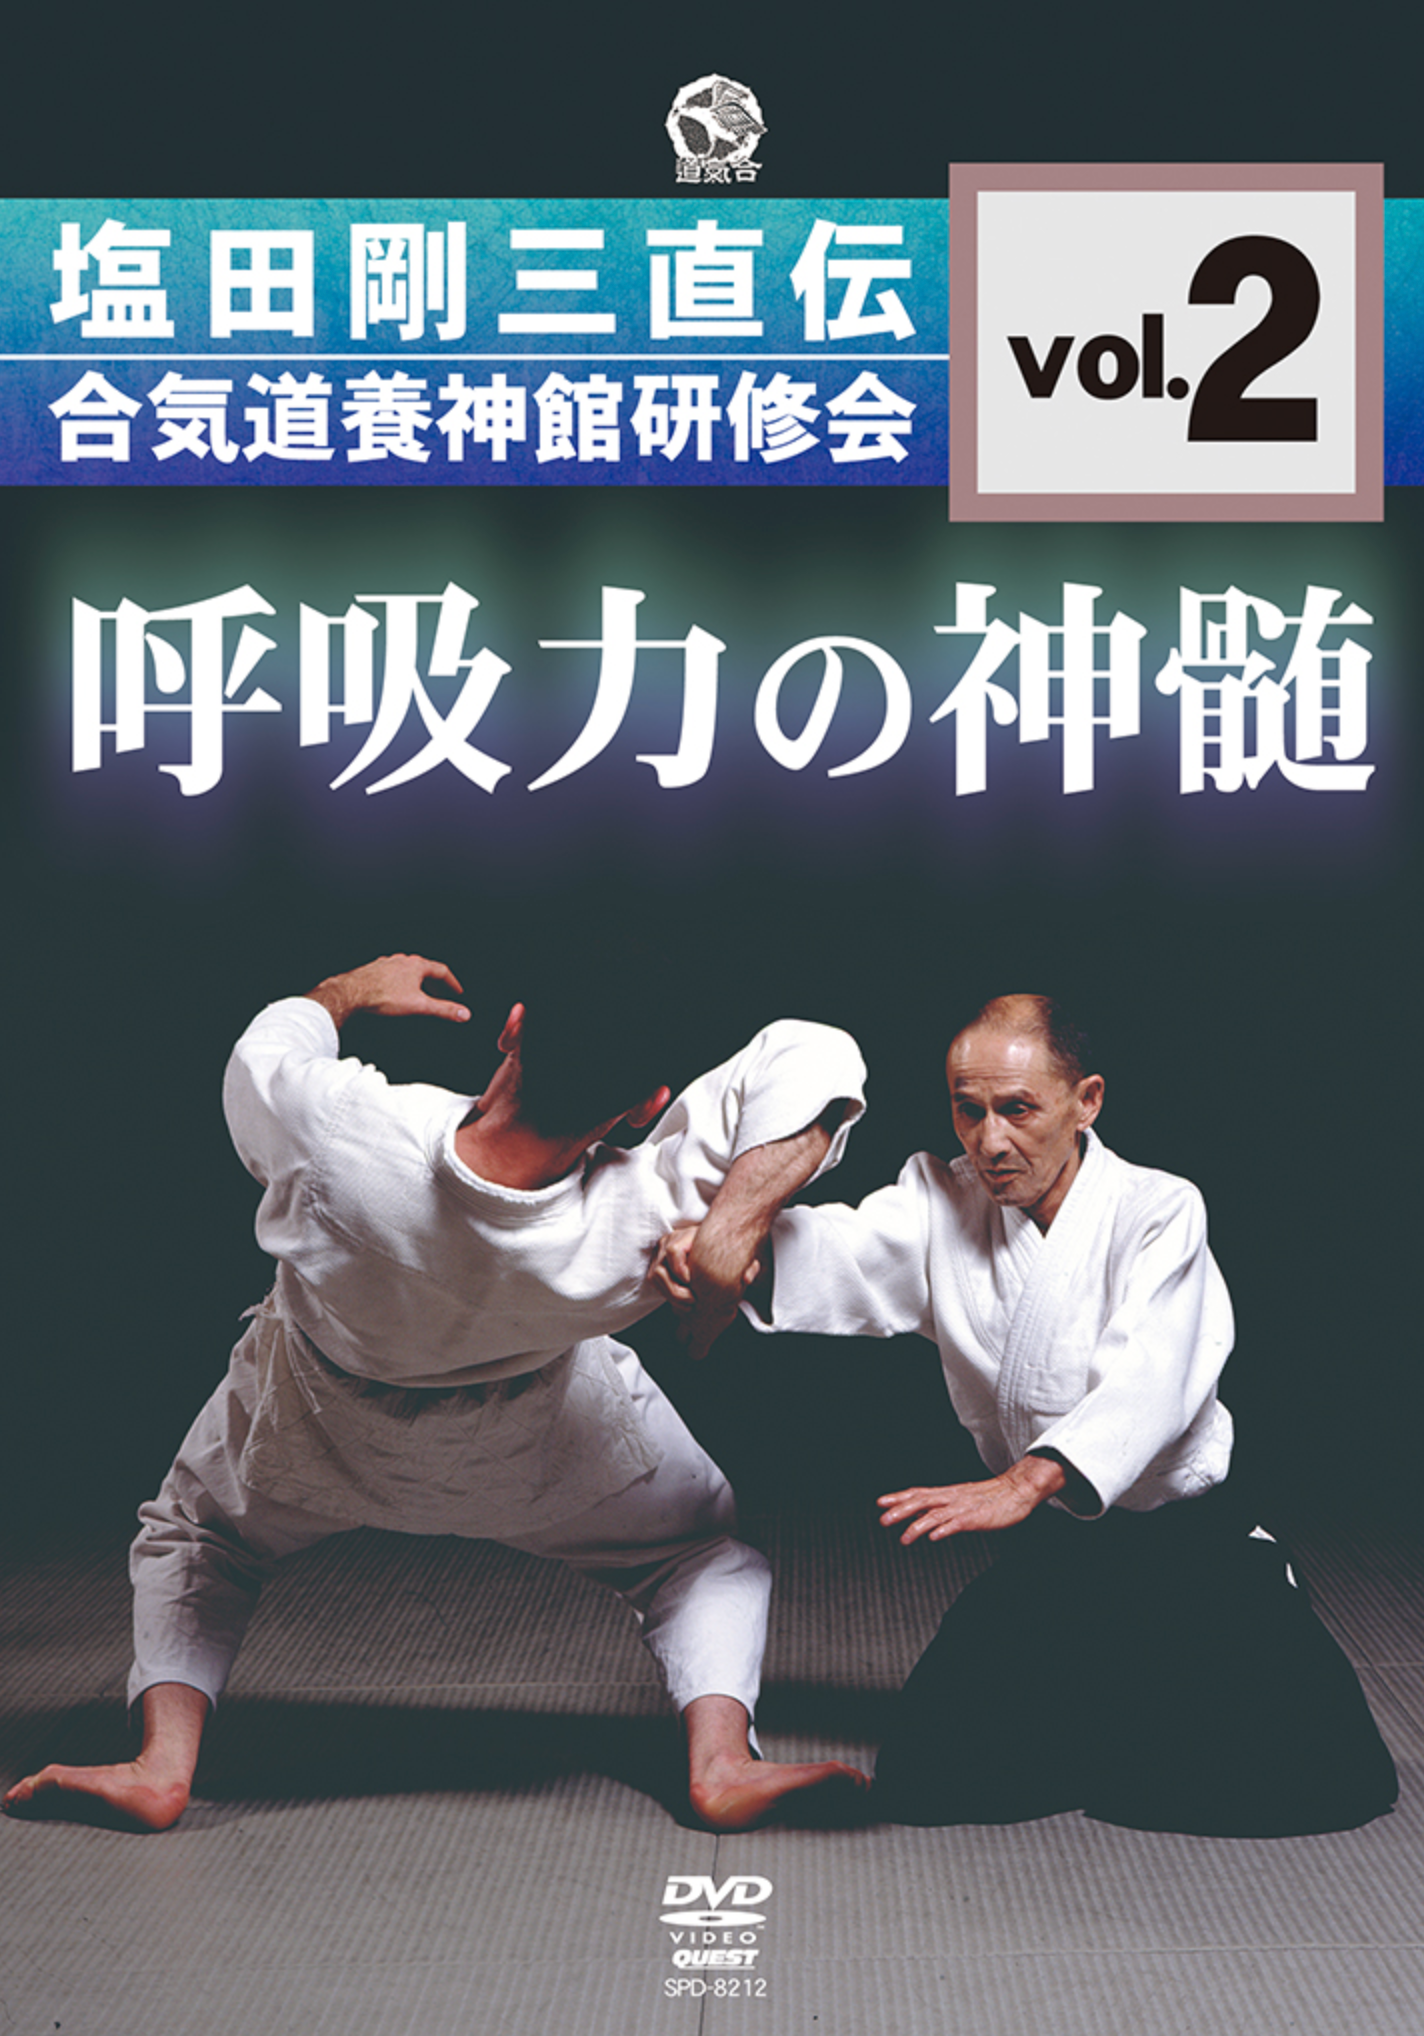 Essence of Kokyu Ryoku Vol 2 DVD with Gozo Shioda & Kyoichi Inoue - Budovideos Inc